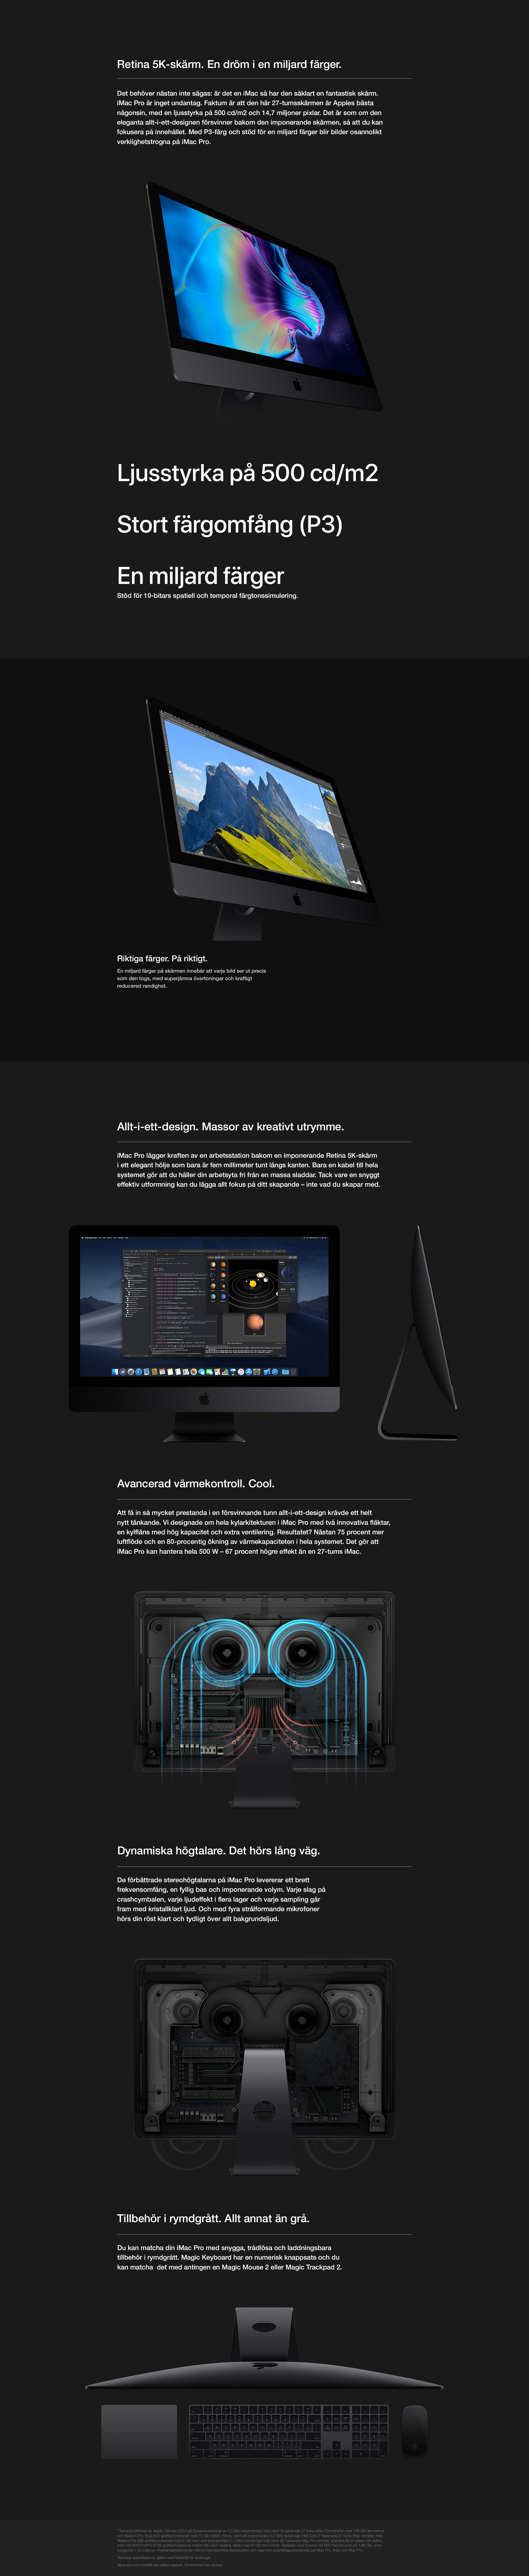 iMac Pro 2019